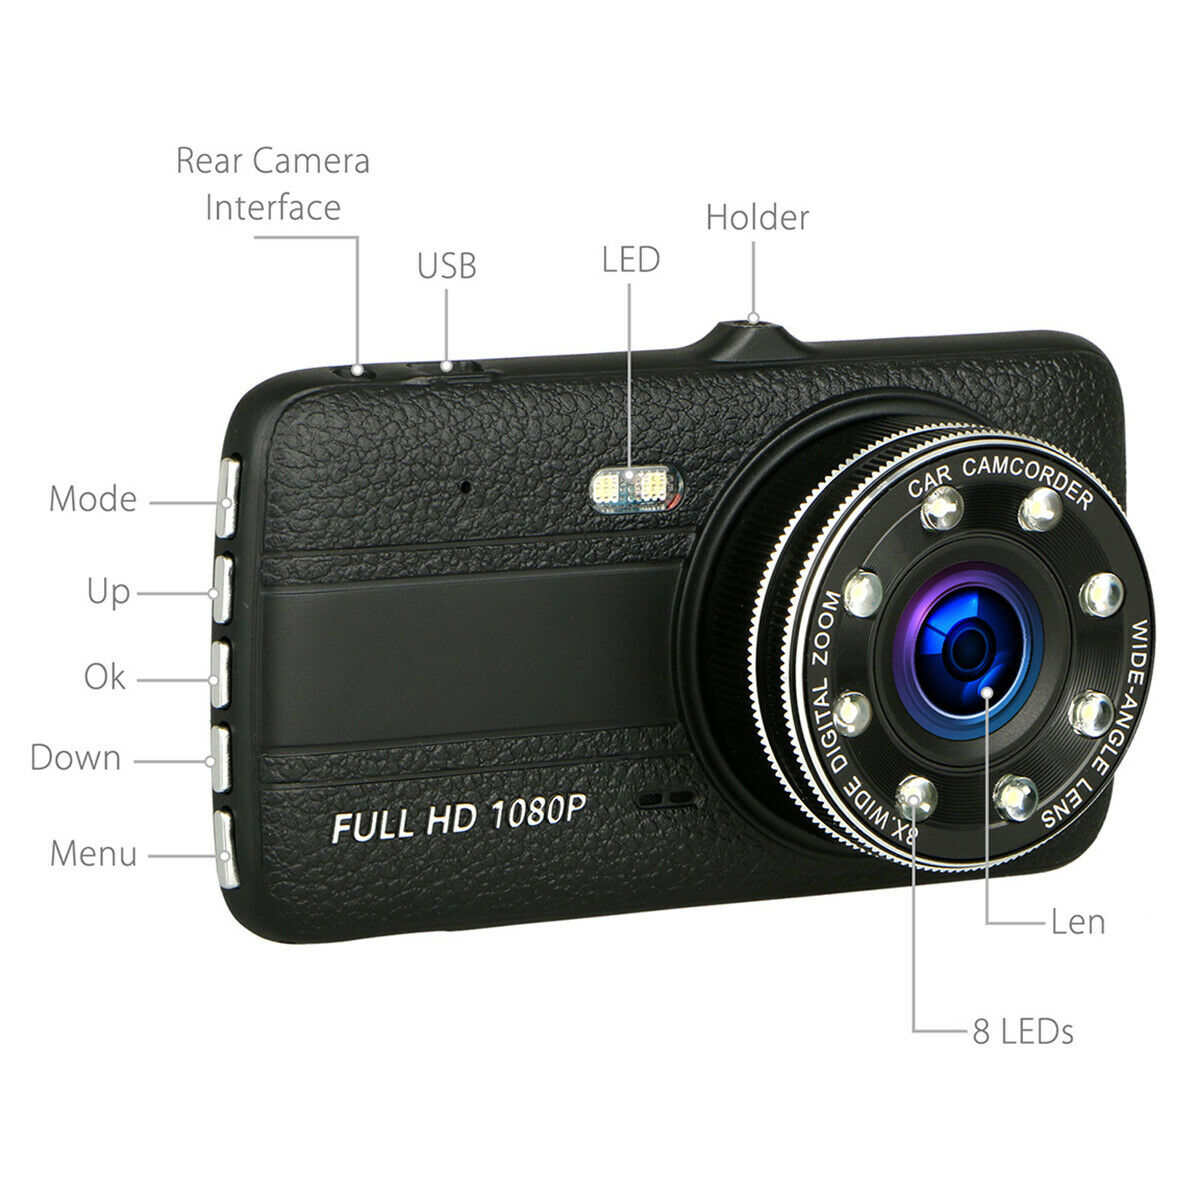 Dark Slate Gray HD driving recorder with 8 night vision lights (8 lights Dual lens 32G)